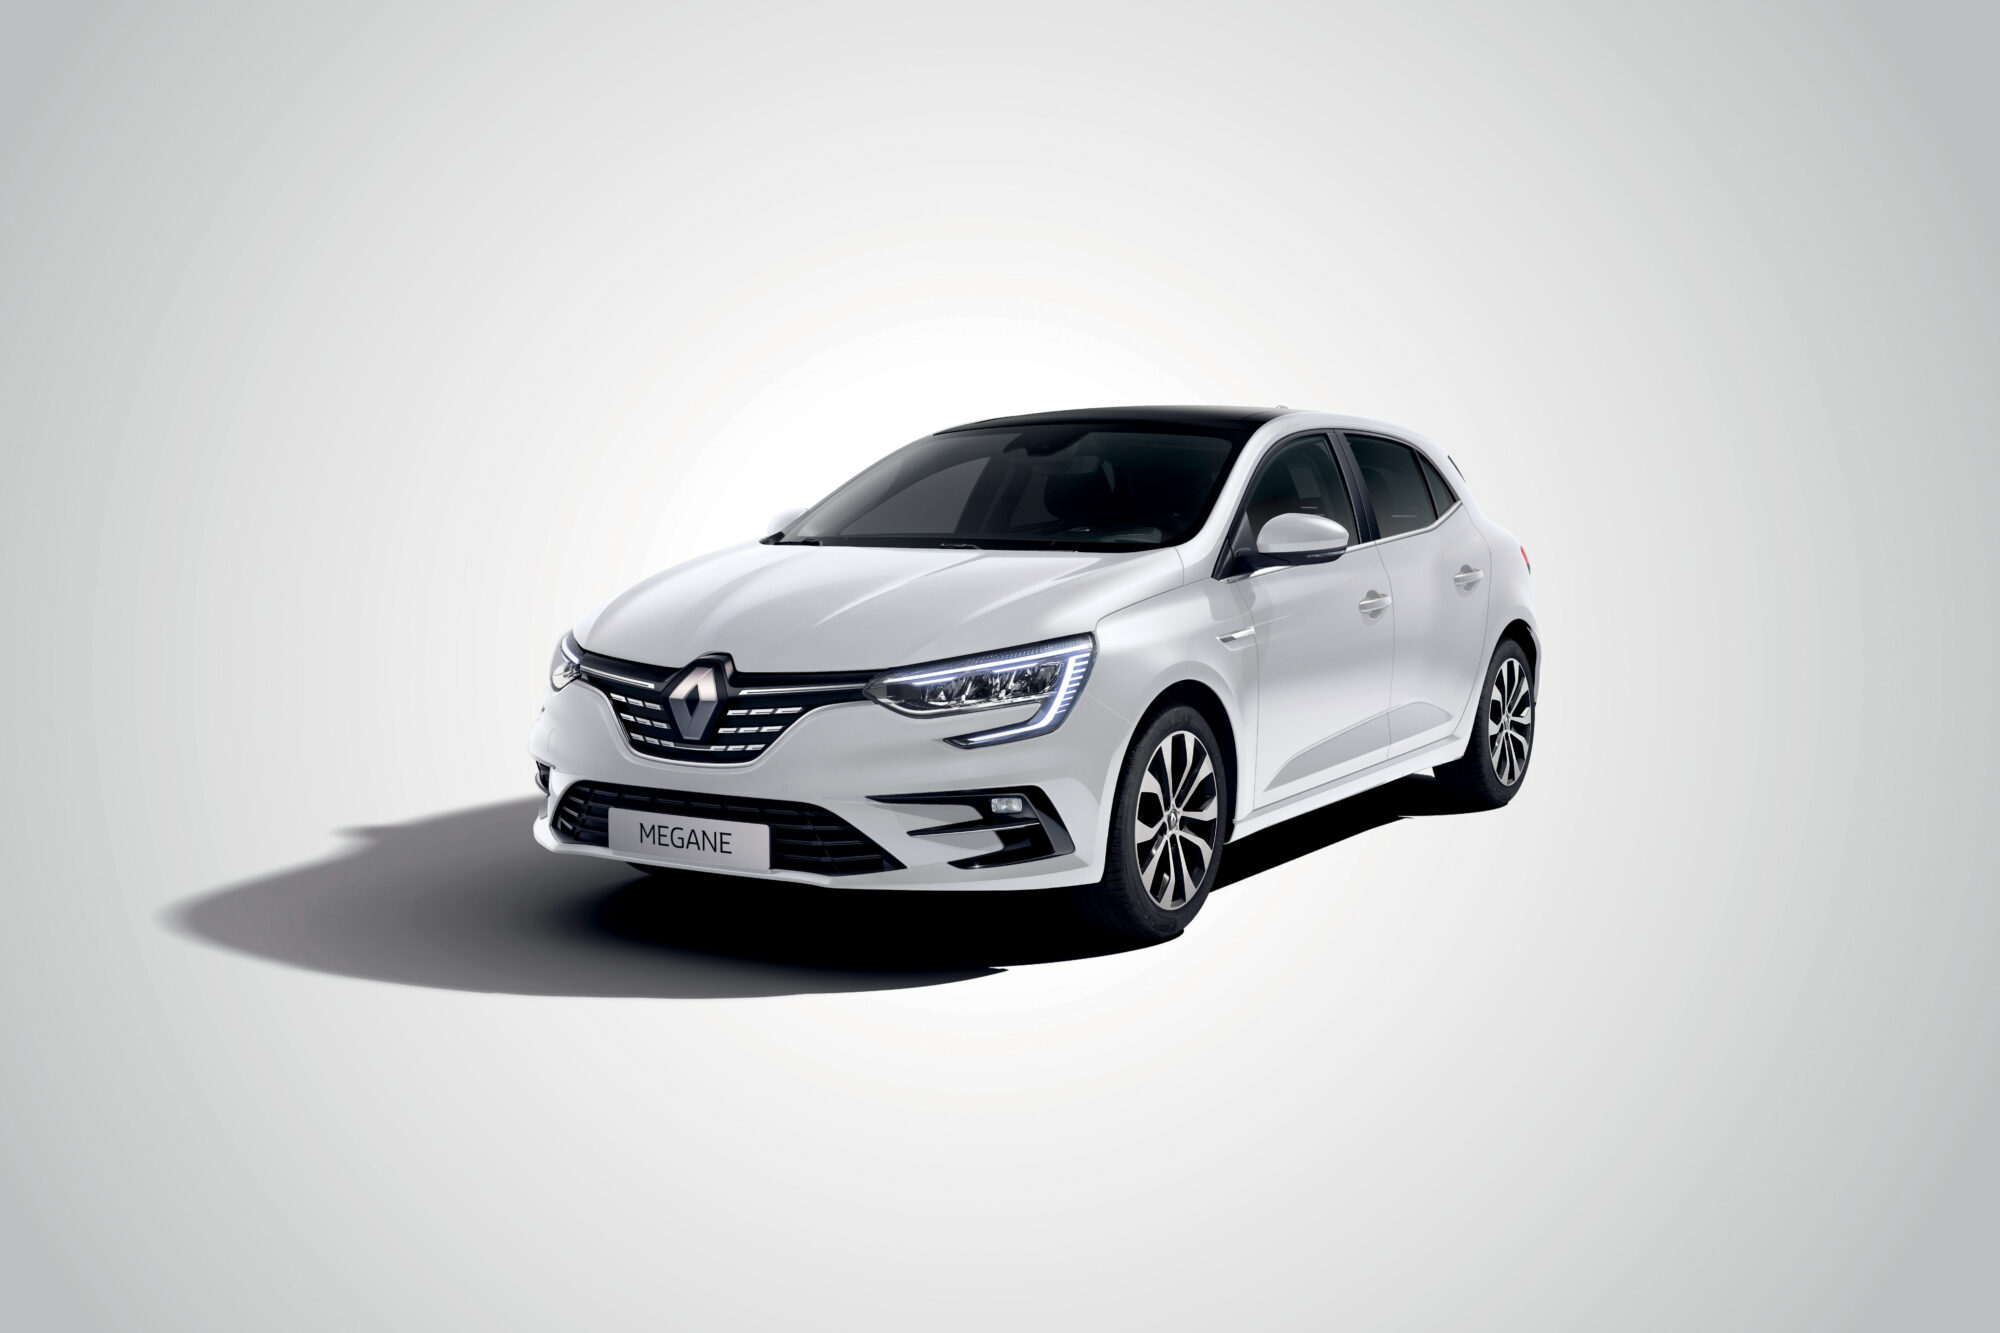 2020 - New Renault MEGANE